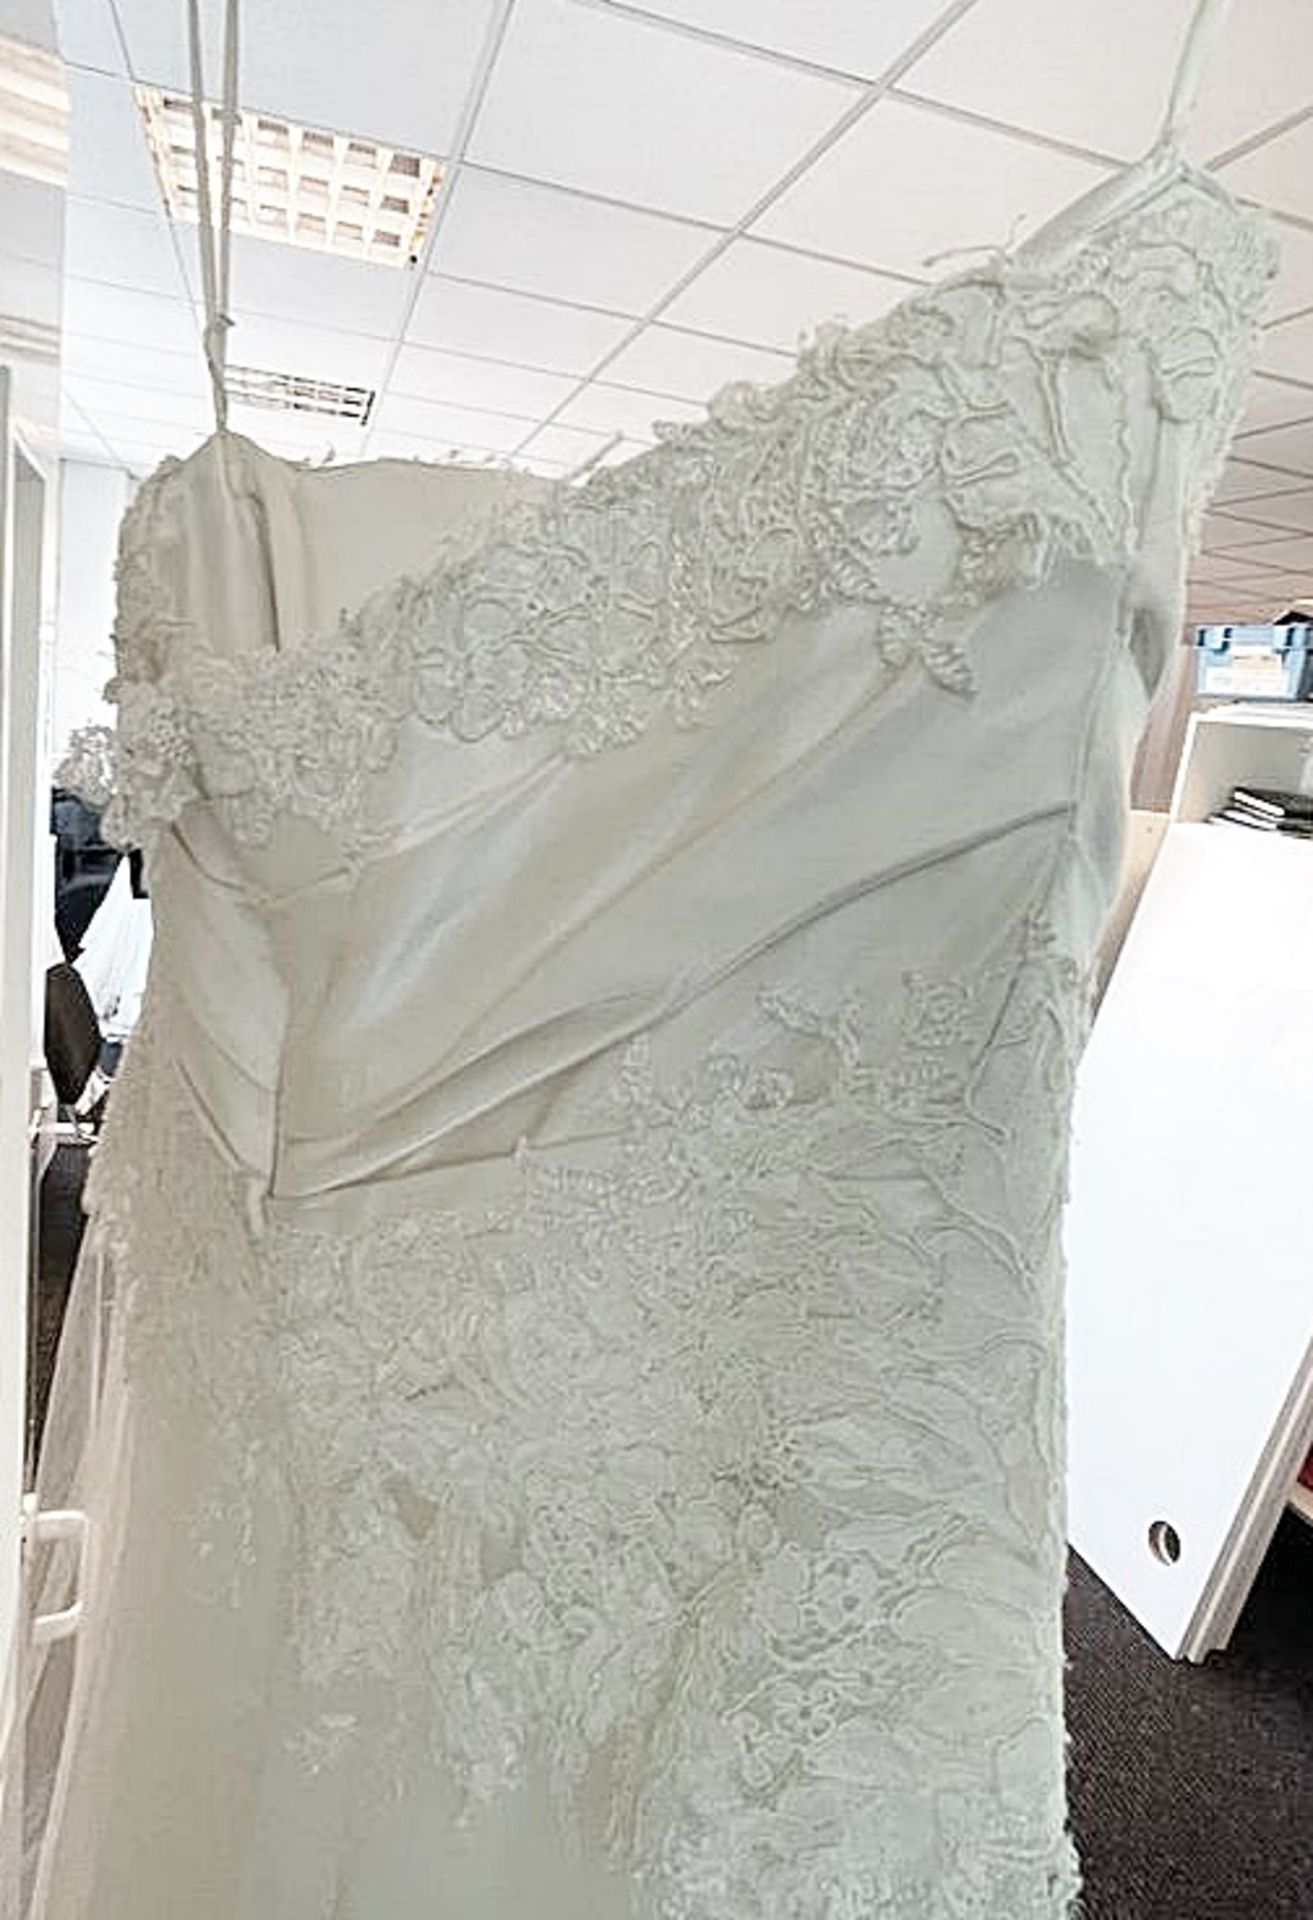 1 x LUSAN MANDONGUS / ANNASUL Y 'Infinity' Strapless Designer Wedding Dress - UK 12 - RRP £1,700 - Image 4 of 8